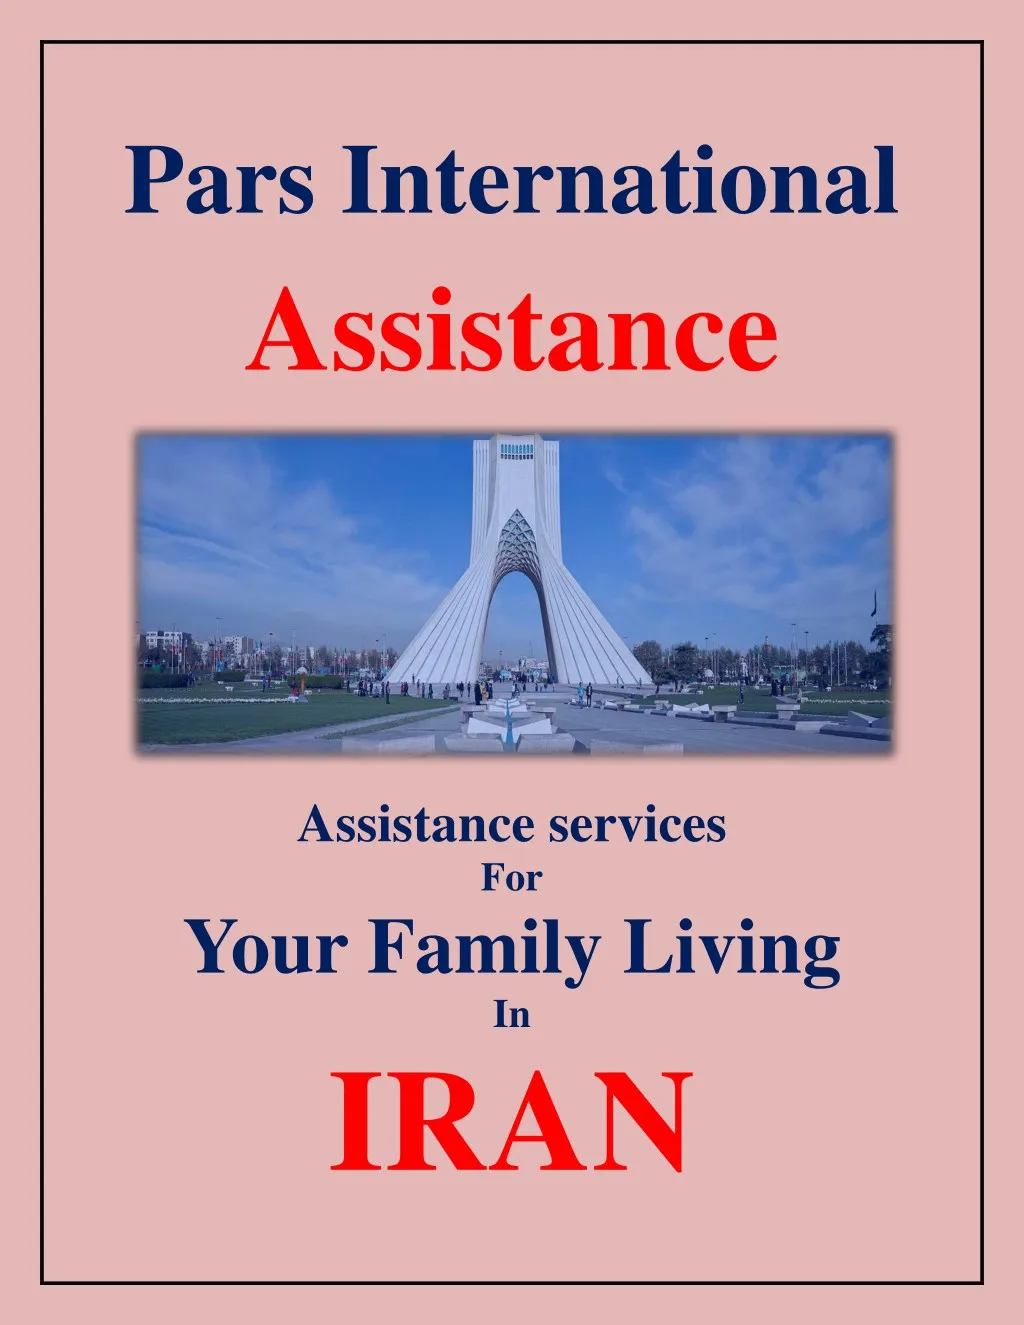 pars international assistance